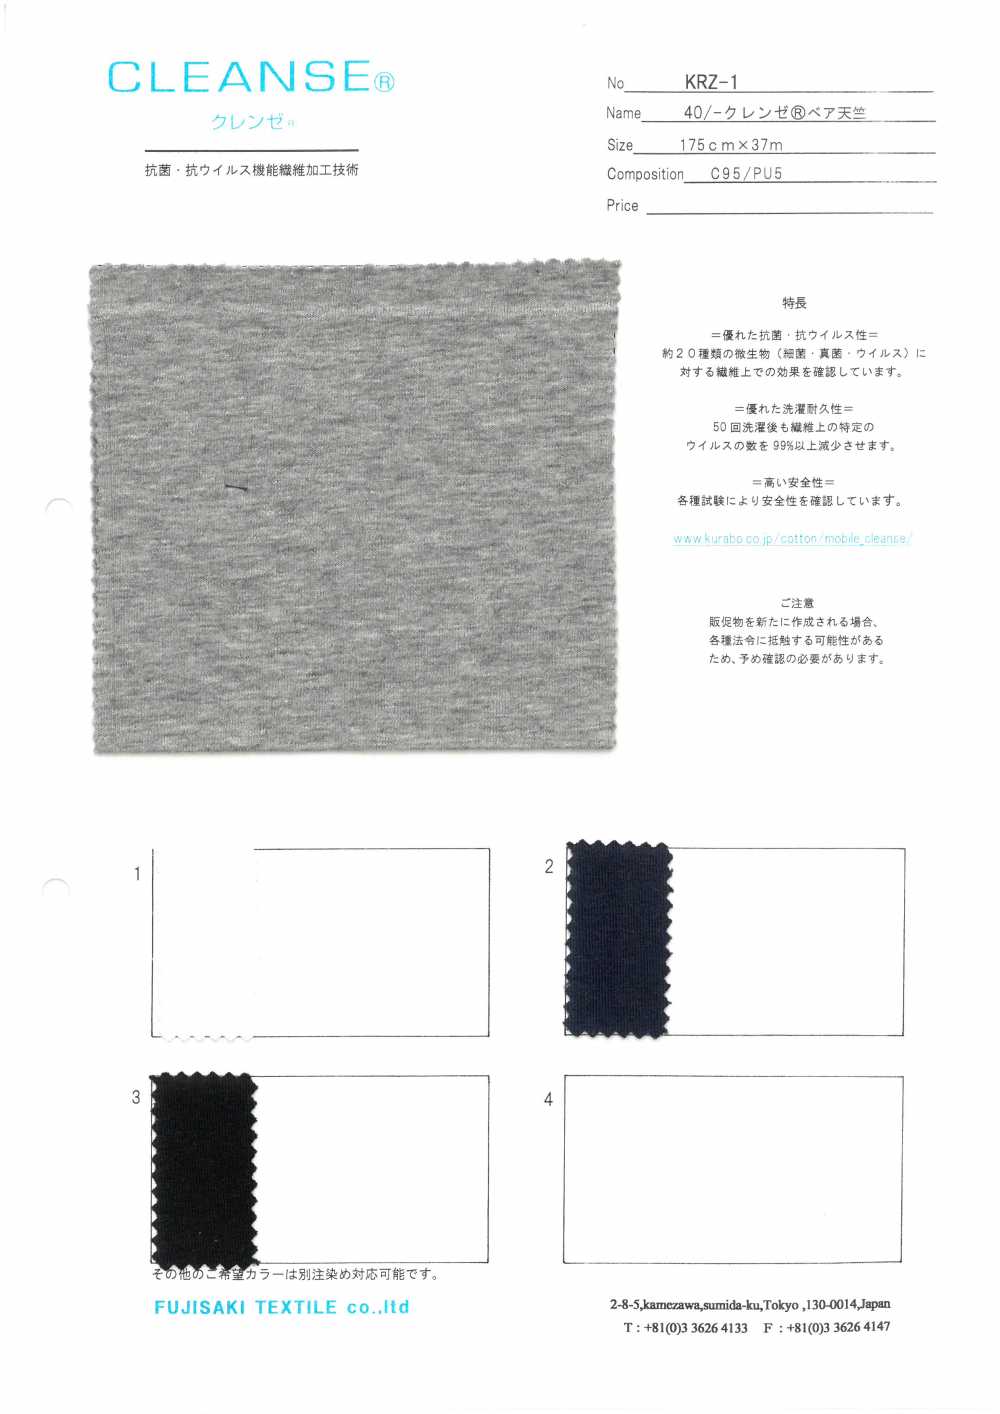 KRZ-1 Camisa De Algodão 40/ CLEANSE&#174;Urso[Têxtil / Tecido] Fujisaki Textile